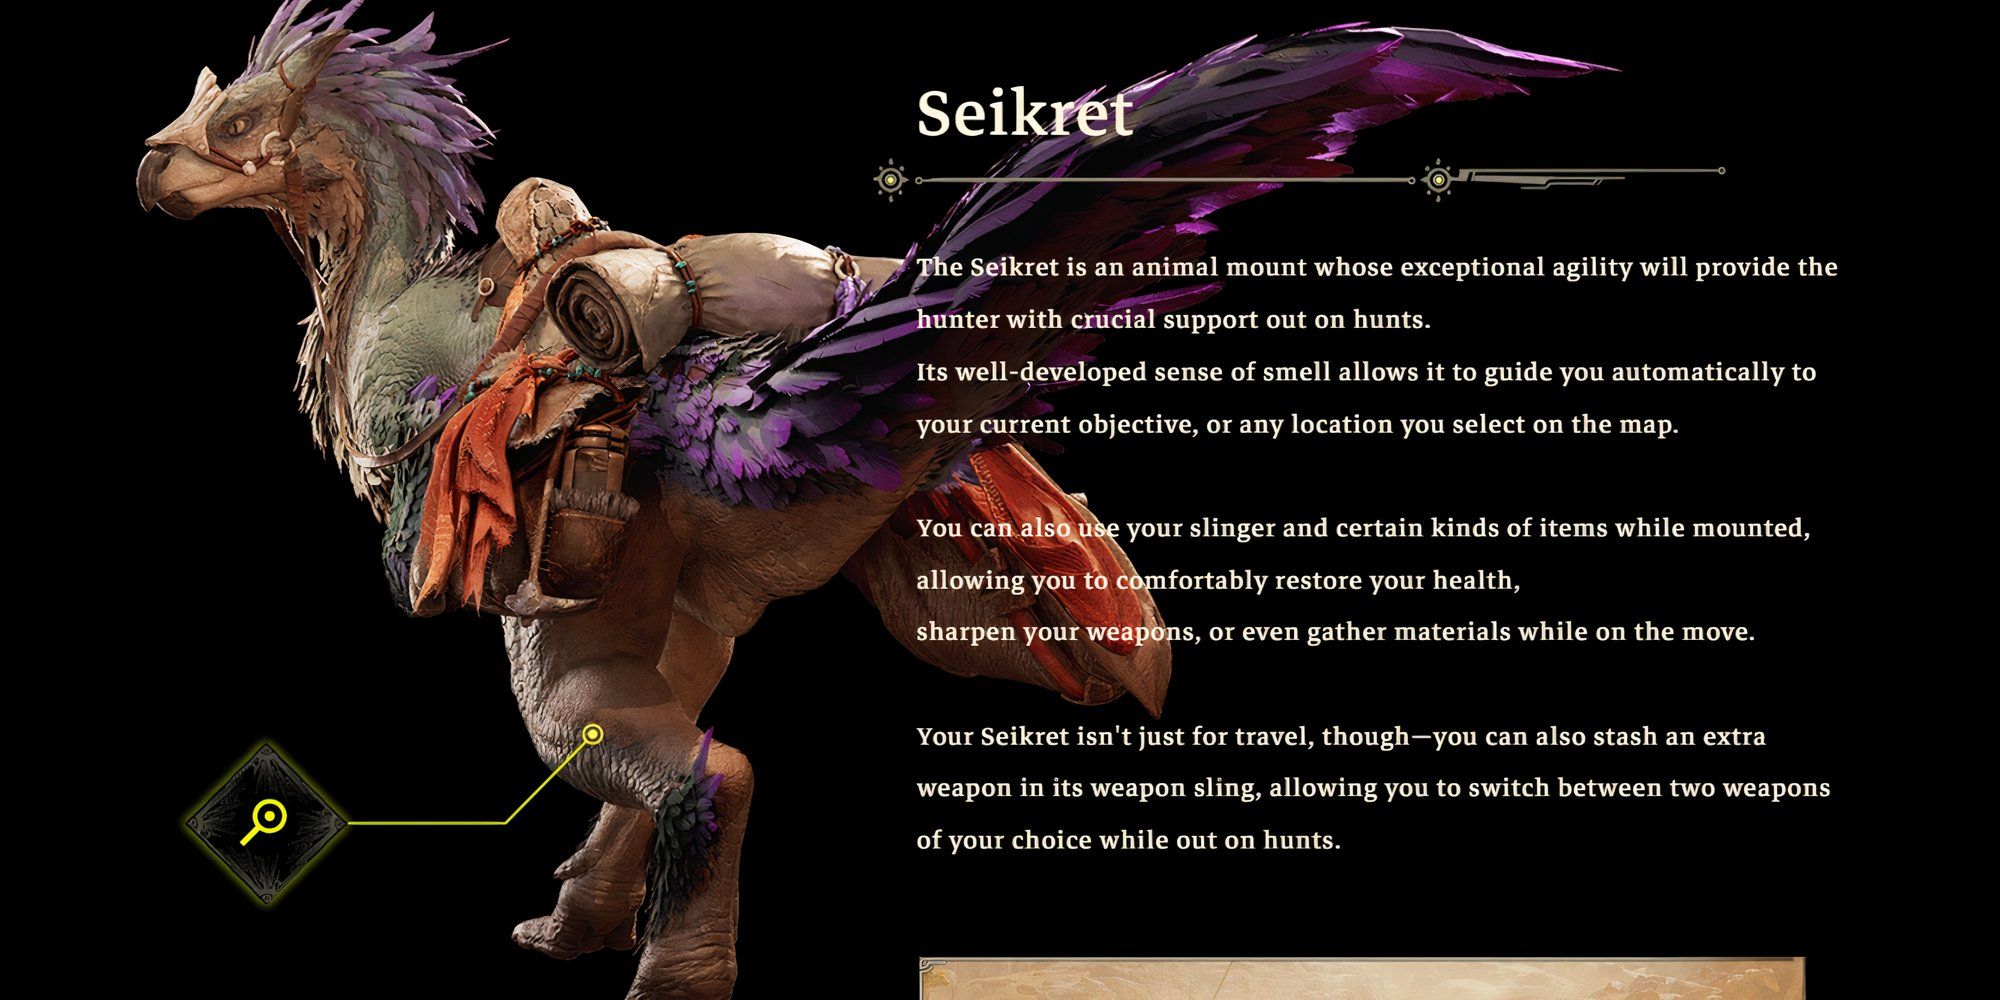 Still of the Seikret description from Capcom's Monster Hunter Wilds website.